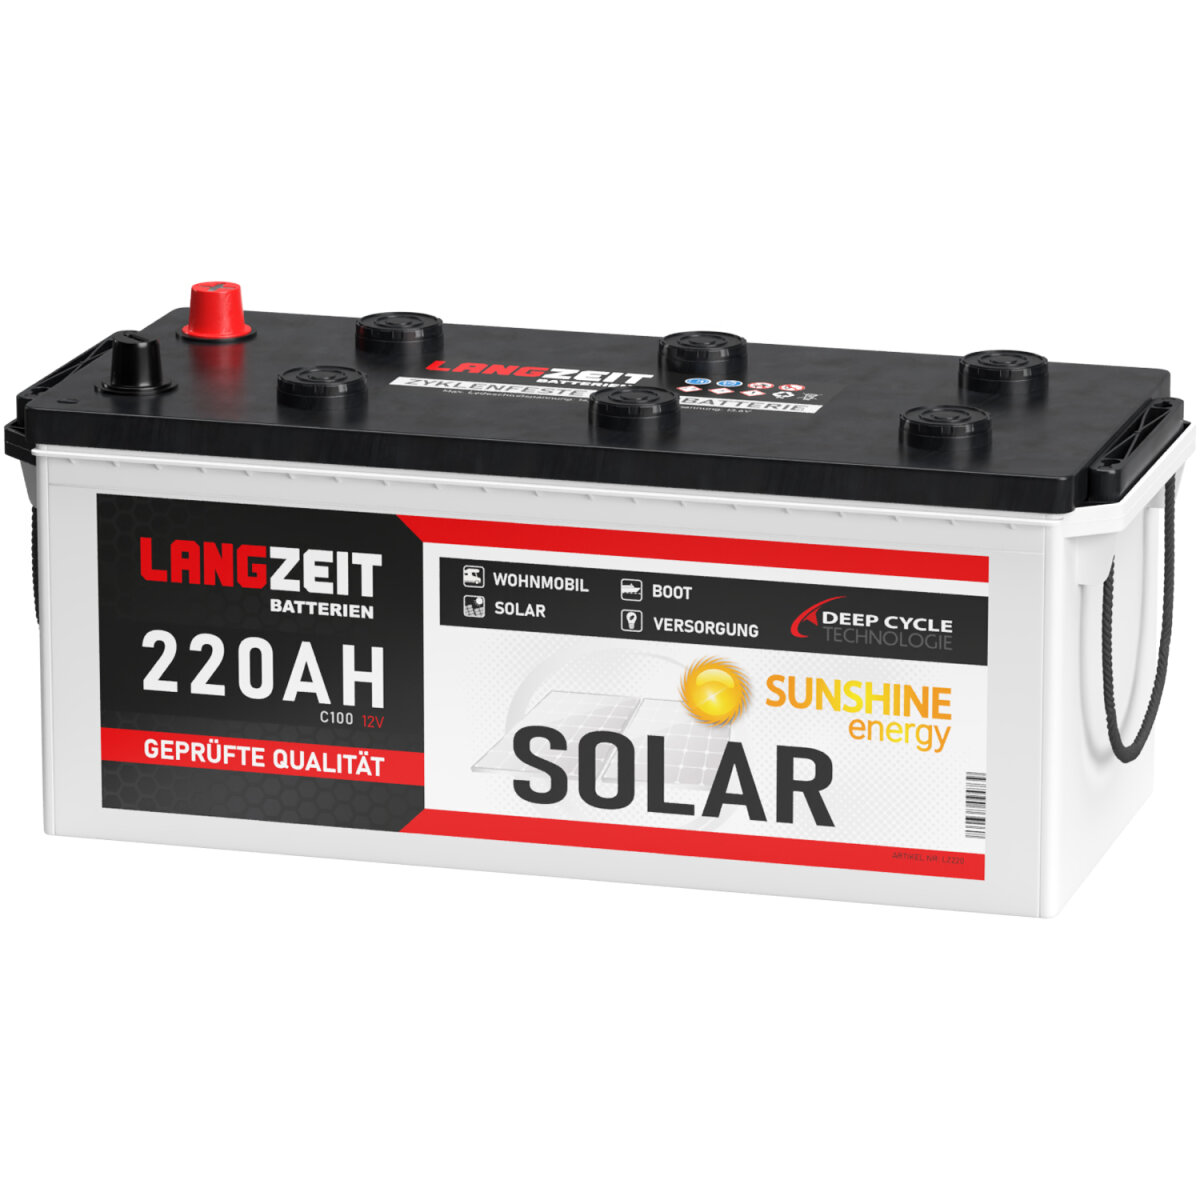 Langzeit Solarbatterie 220Ah 12V, 228,90 €